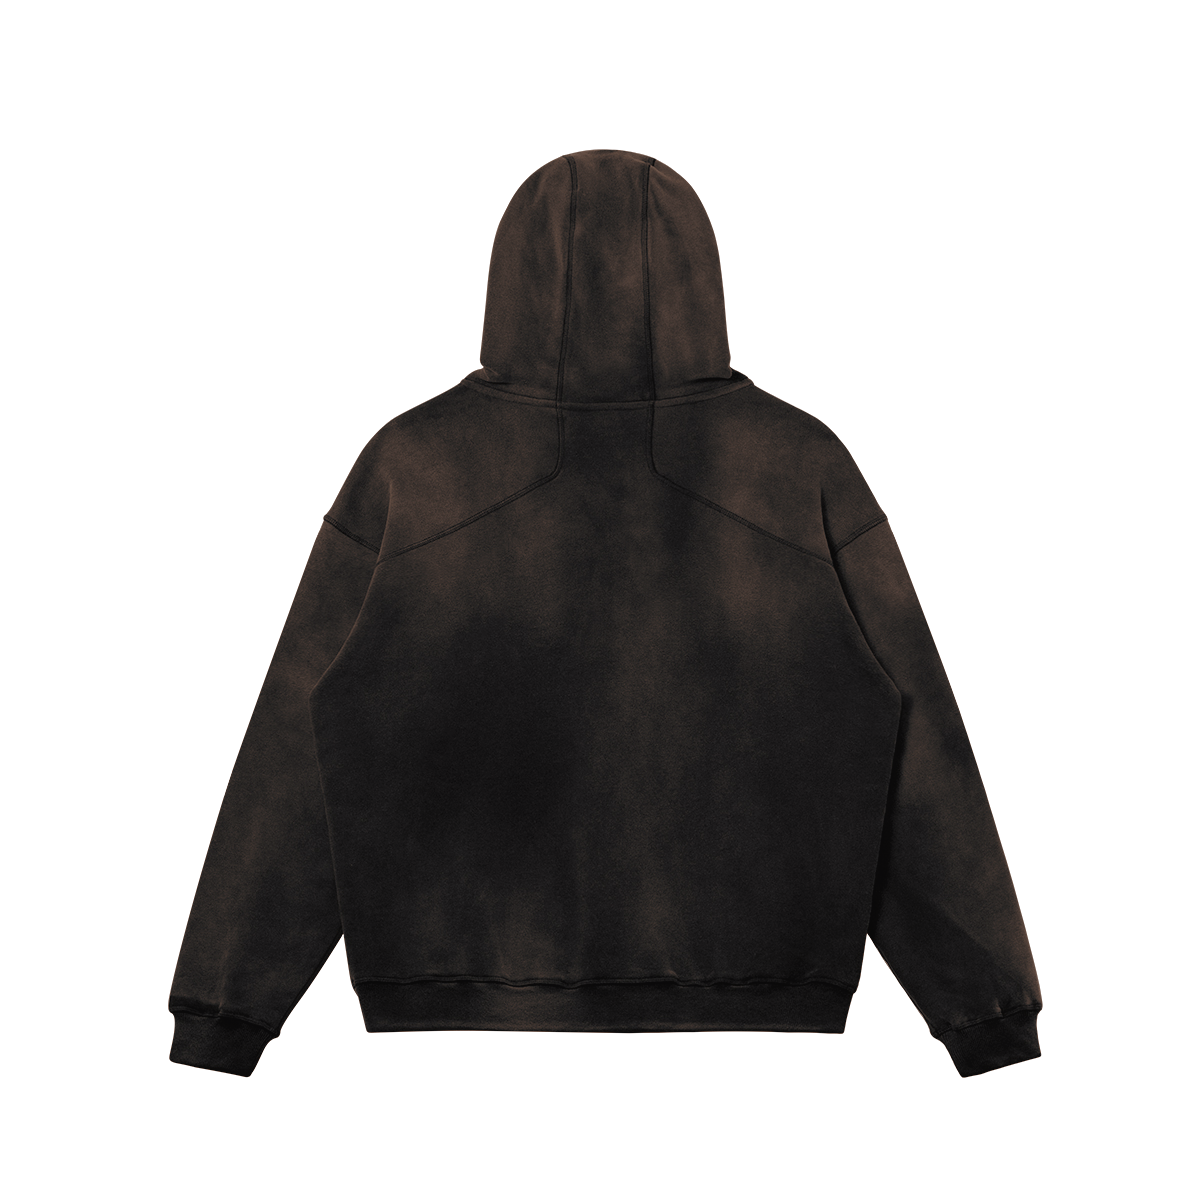 Interregnum hoodie basic rusty black